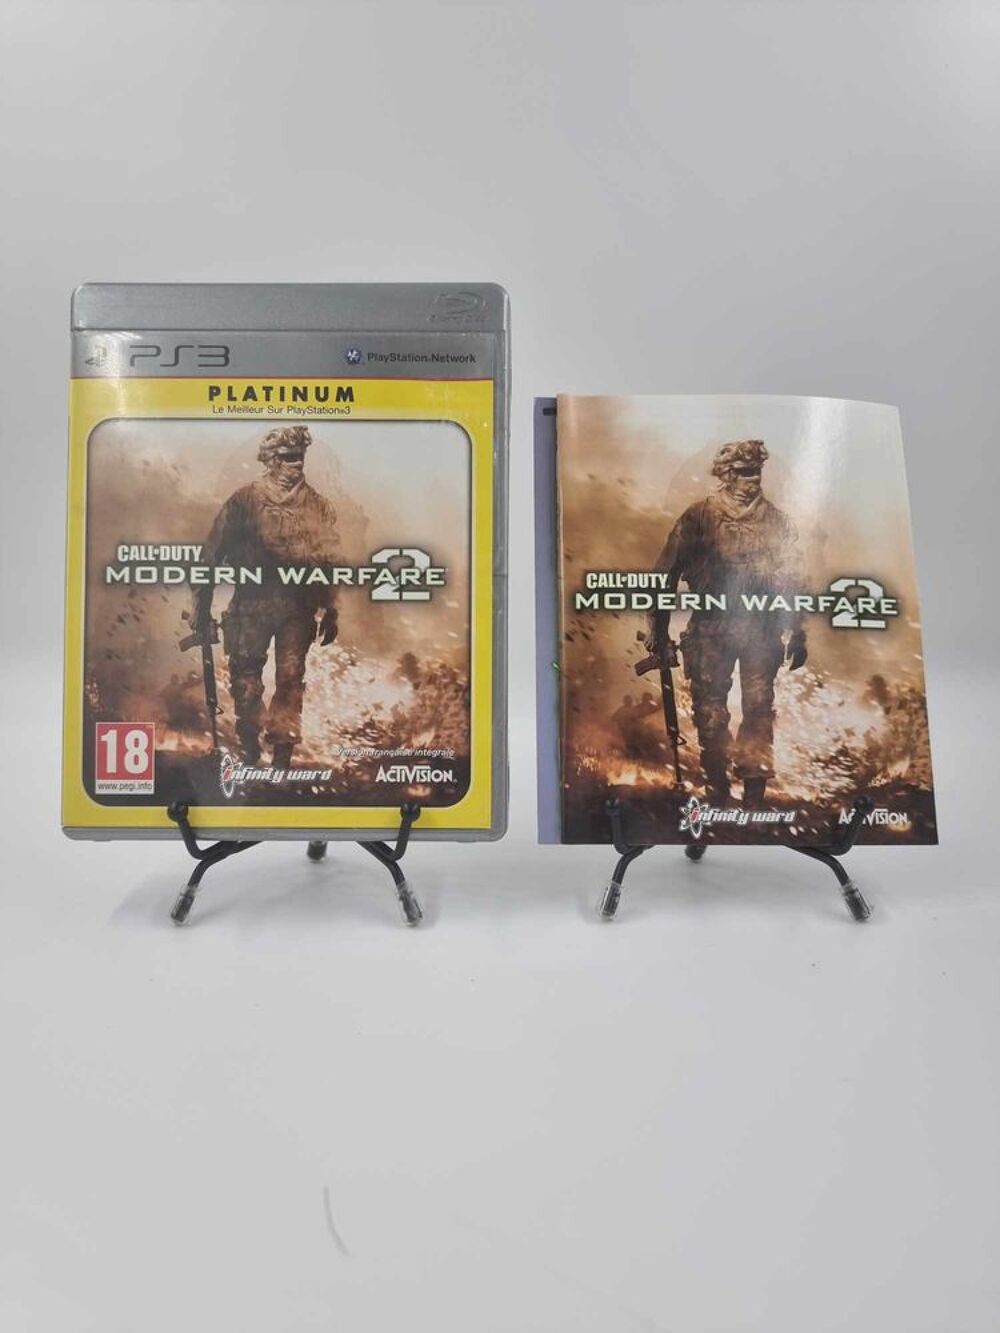 Jeu PS3 Playstation 3 Call of Duty Modern Warfare 2 Platinum Consoles et jeux vidos